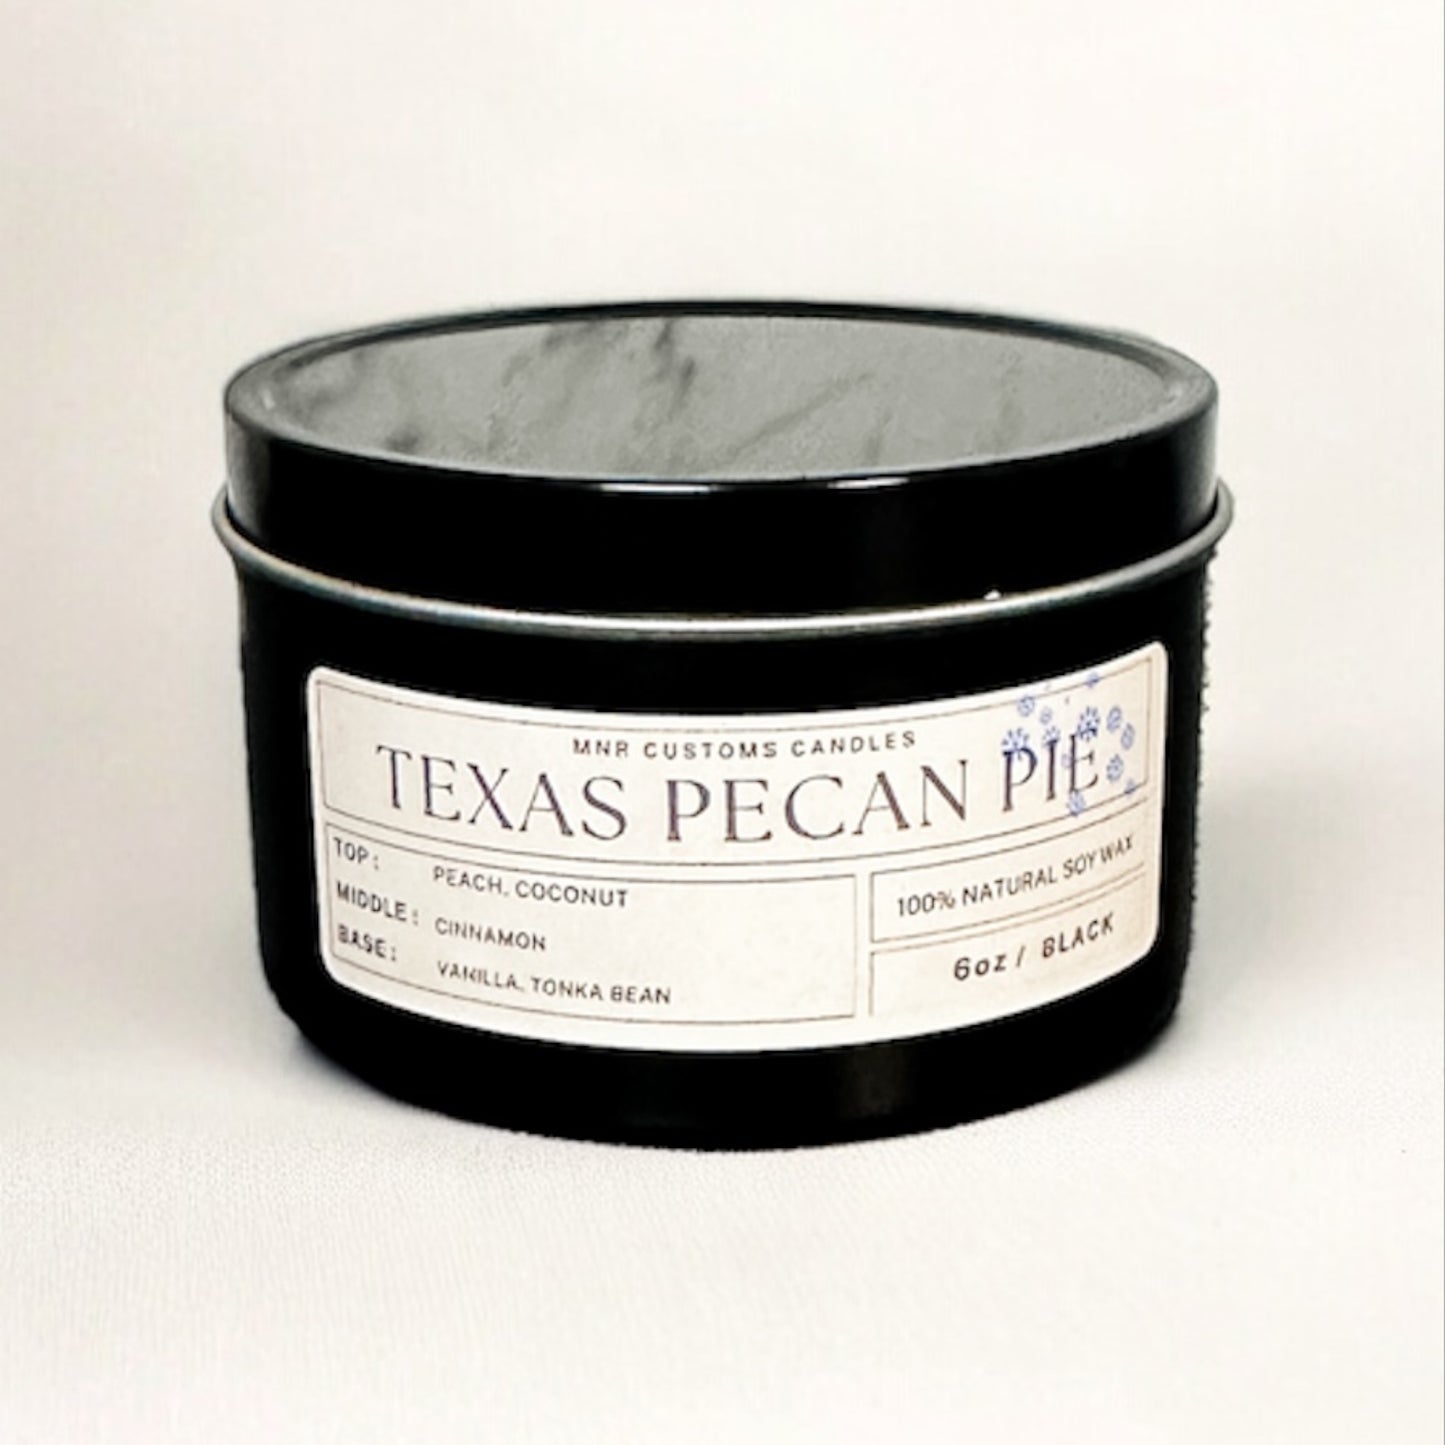 Texas Pecan Pie